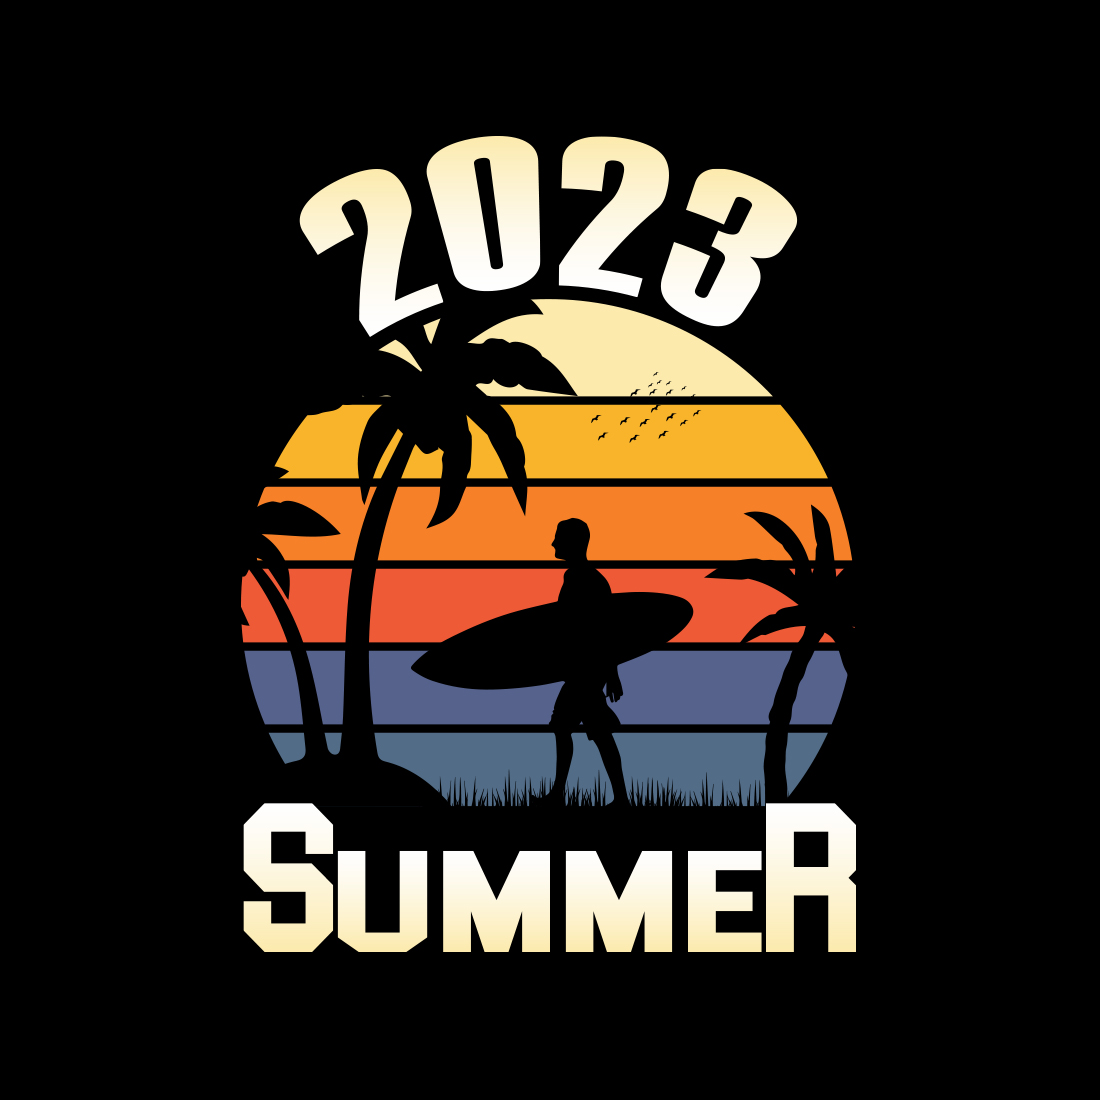 T-Shirt Summer Design cover image.